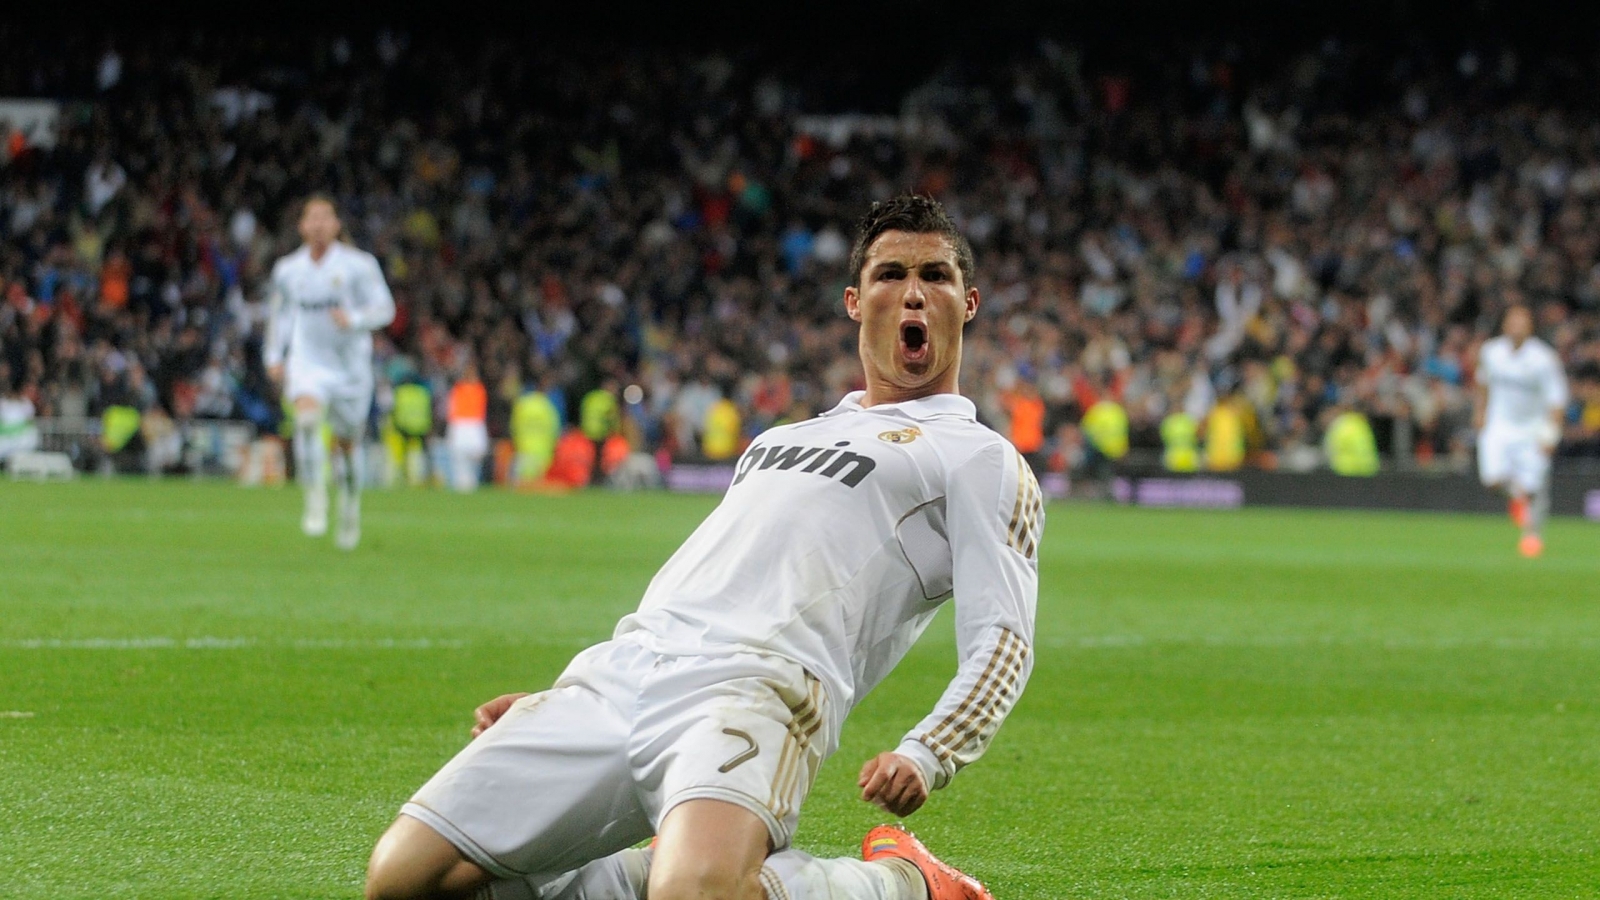 Cristiano Ronaldo Celebrating for 1600 x 900 HDTV resolution